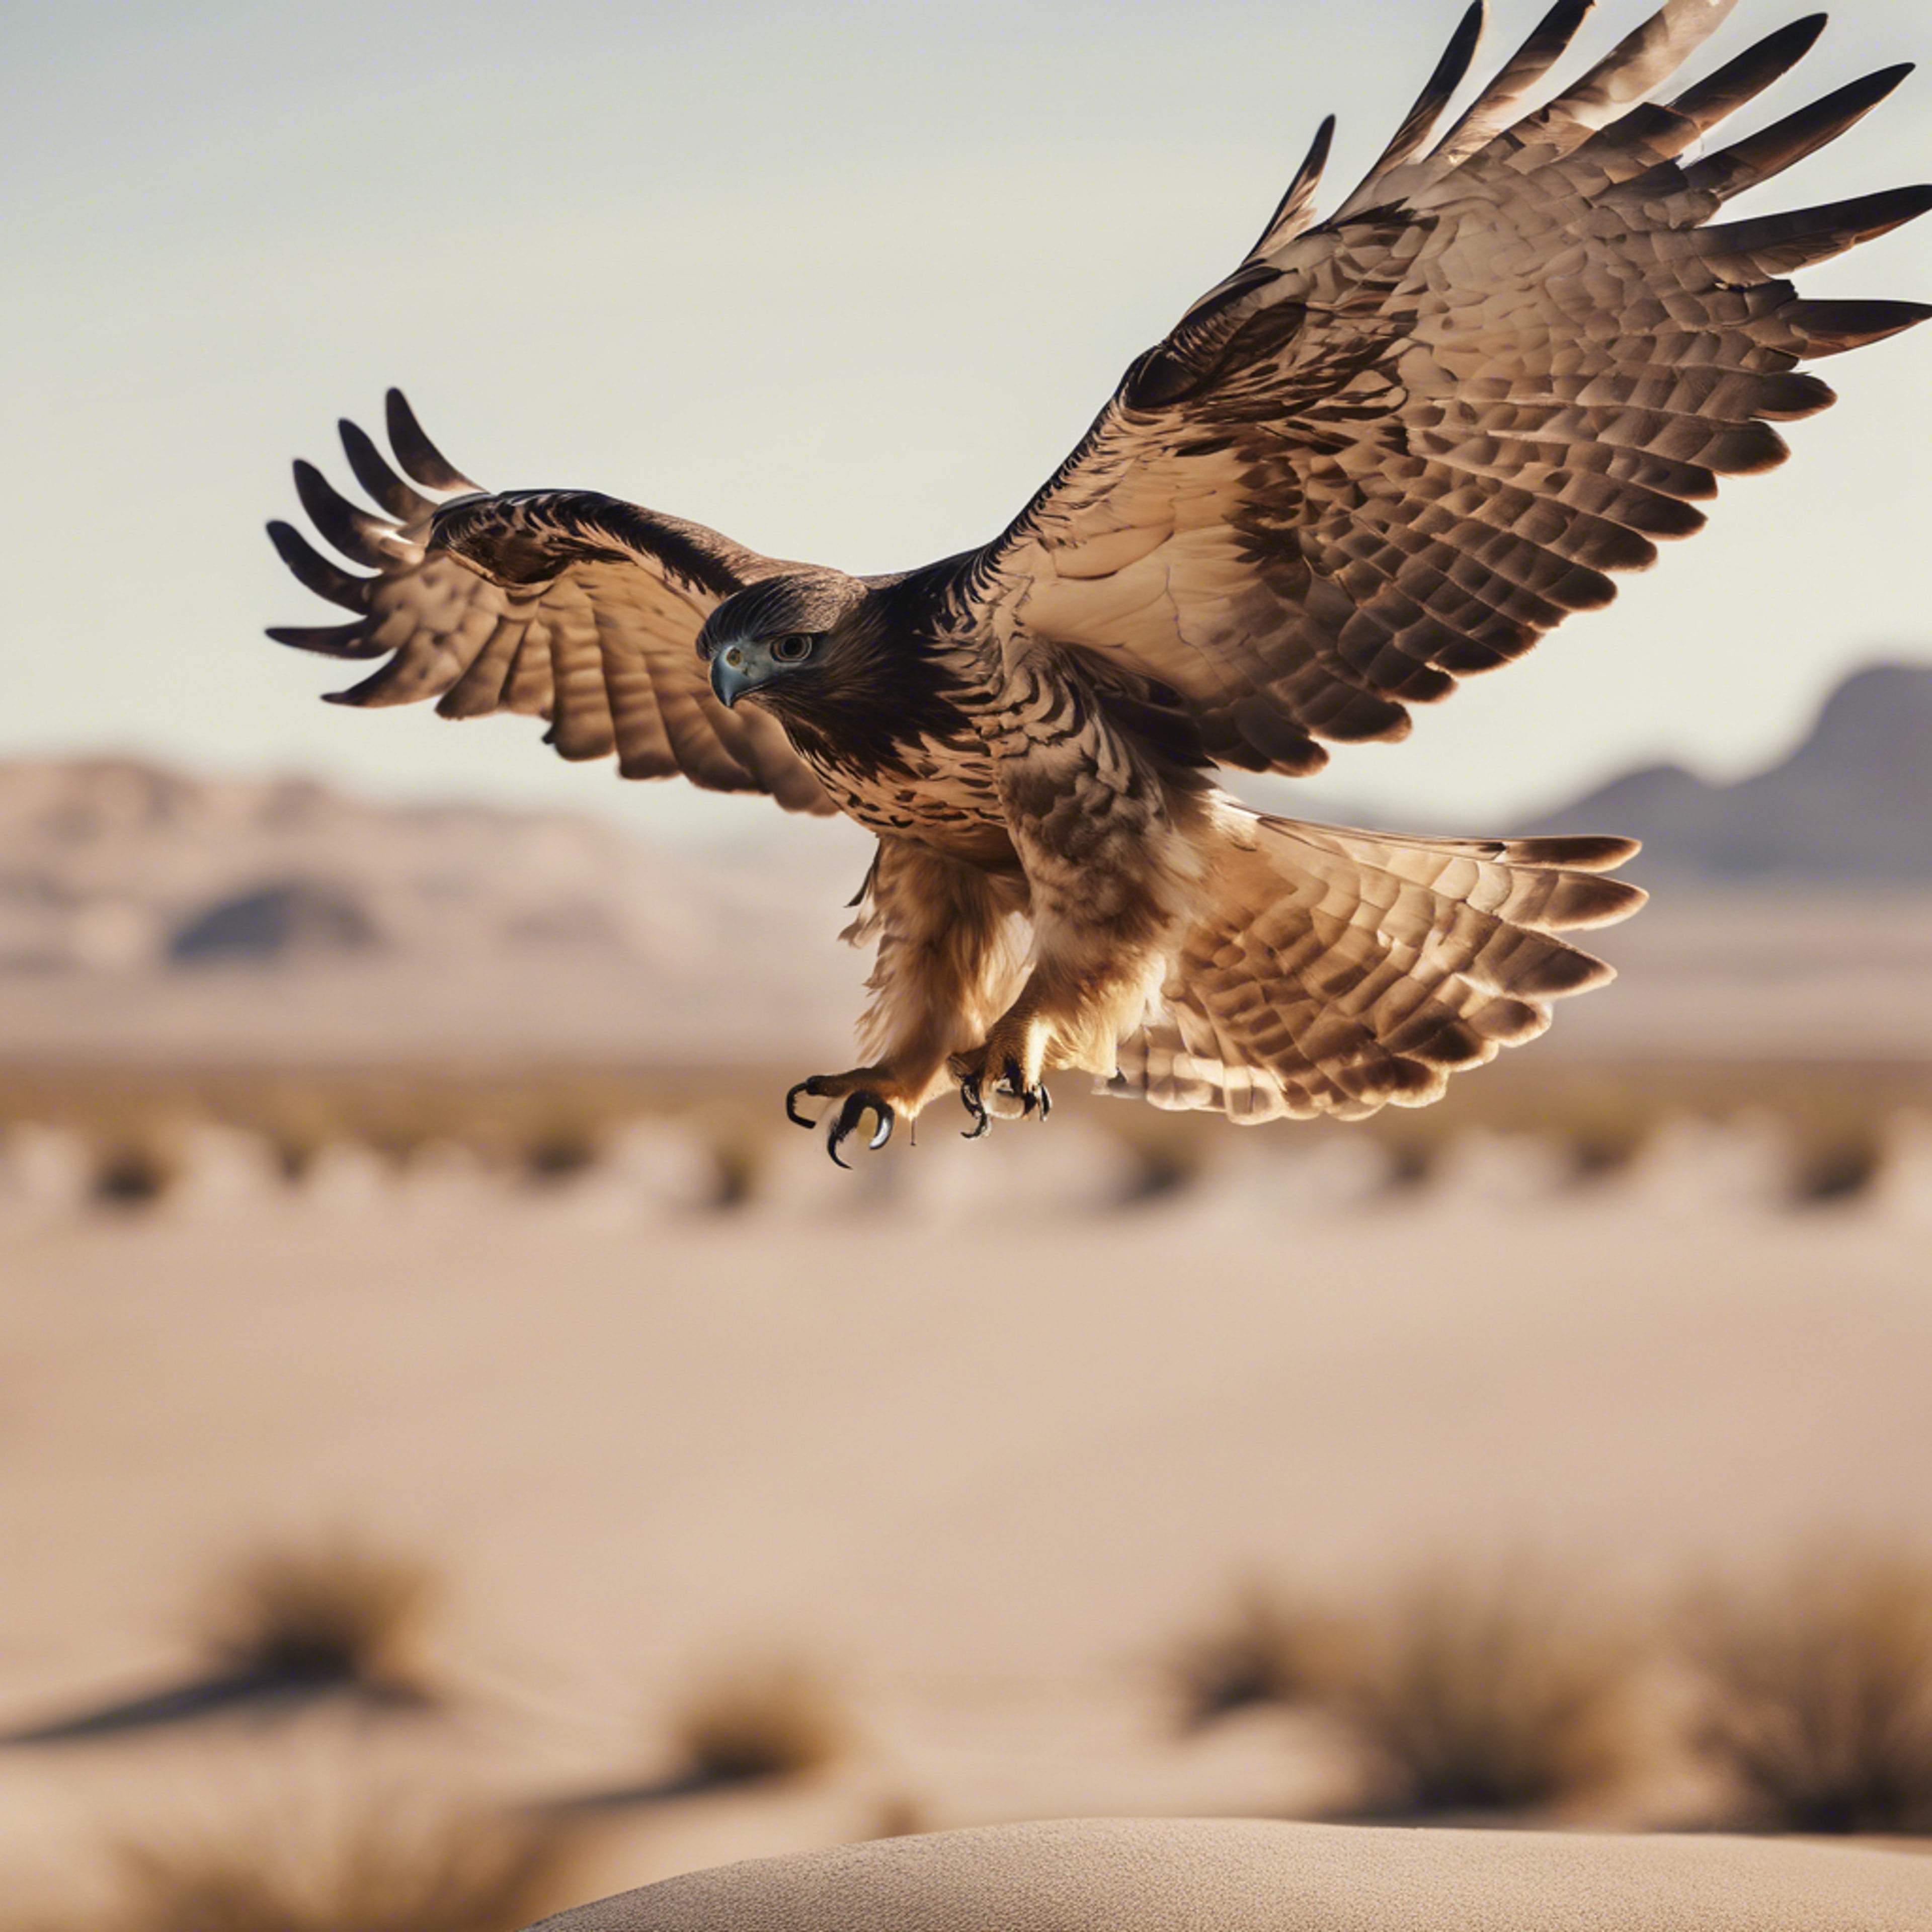 A hawk taking flight from its perch in a cool beige desert landscape. 墙纸[f9770860966b45f09558]